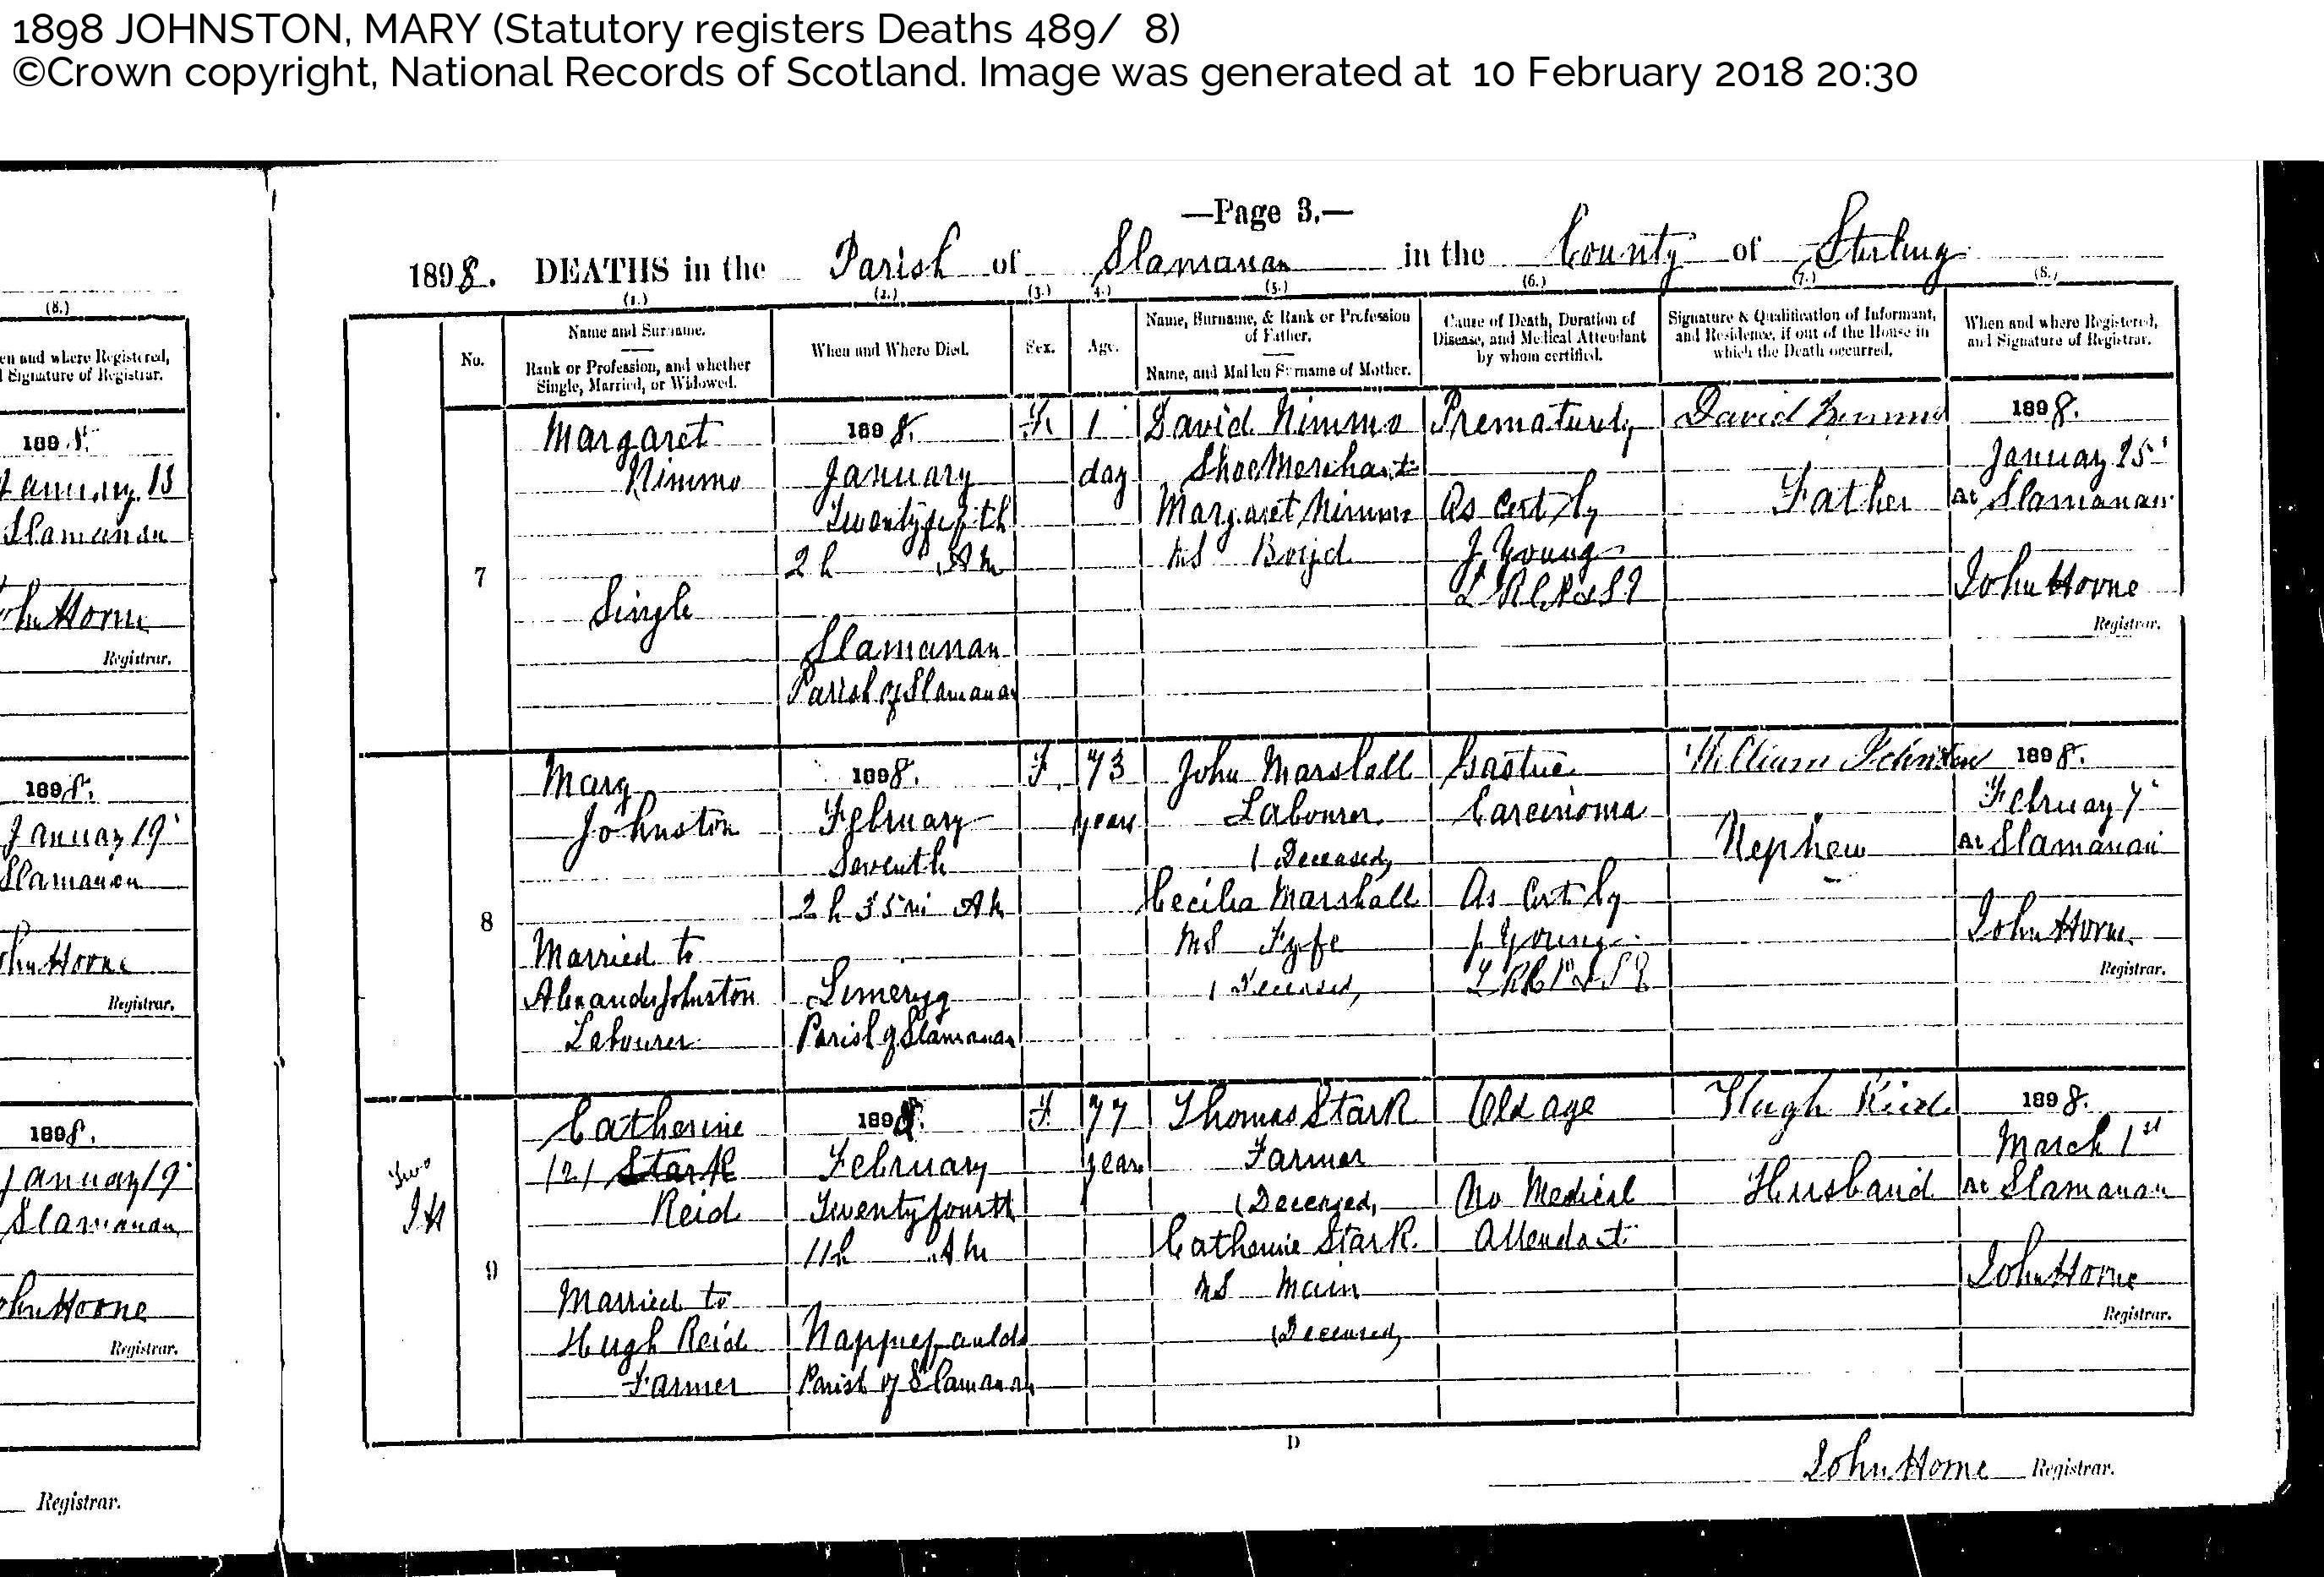 MaryMarshall(Johnston)_D1898 Limerigg Slamannan, February 7, 1898